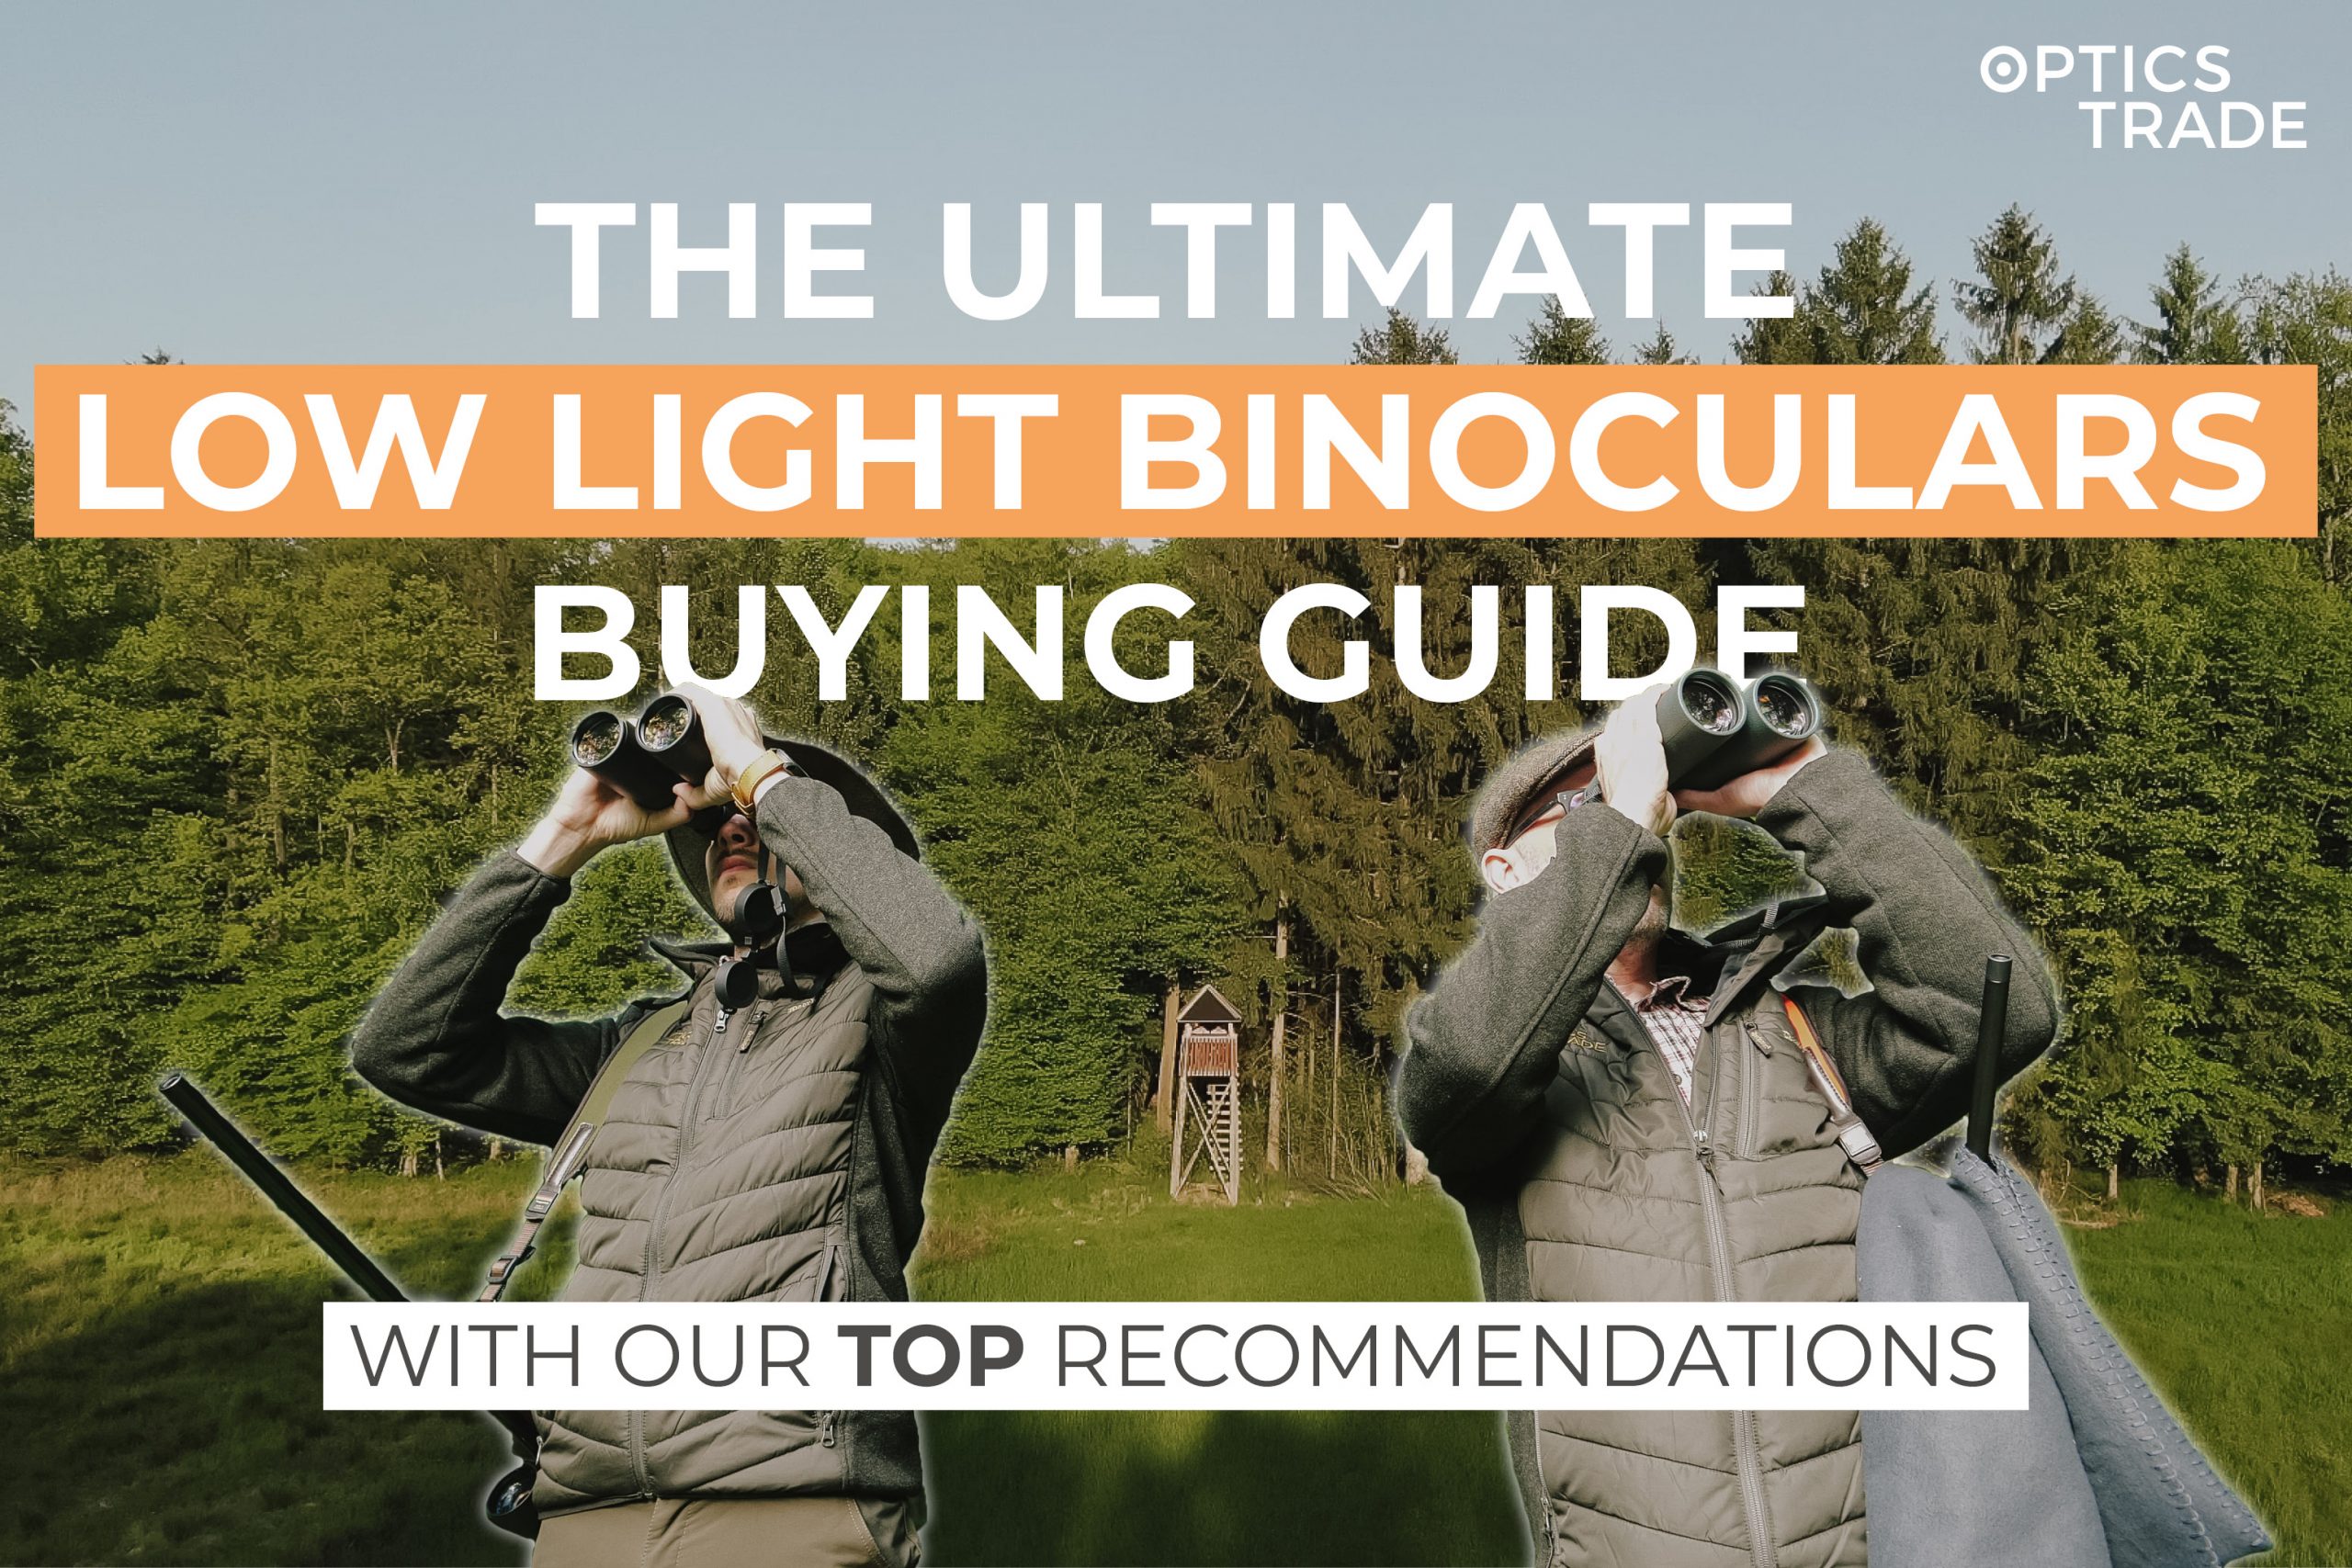 The ULTIMATE Low Light Binoculars Buying Guide